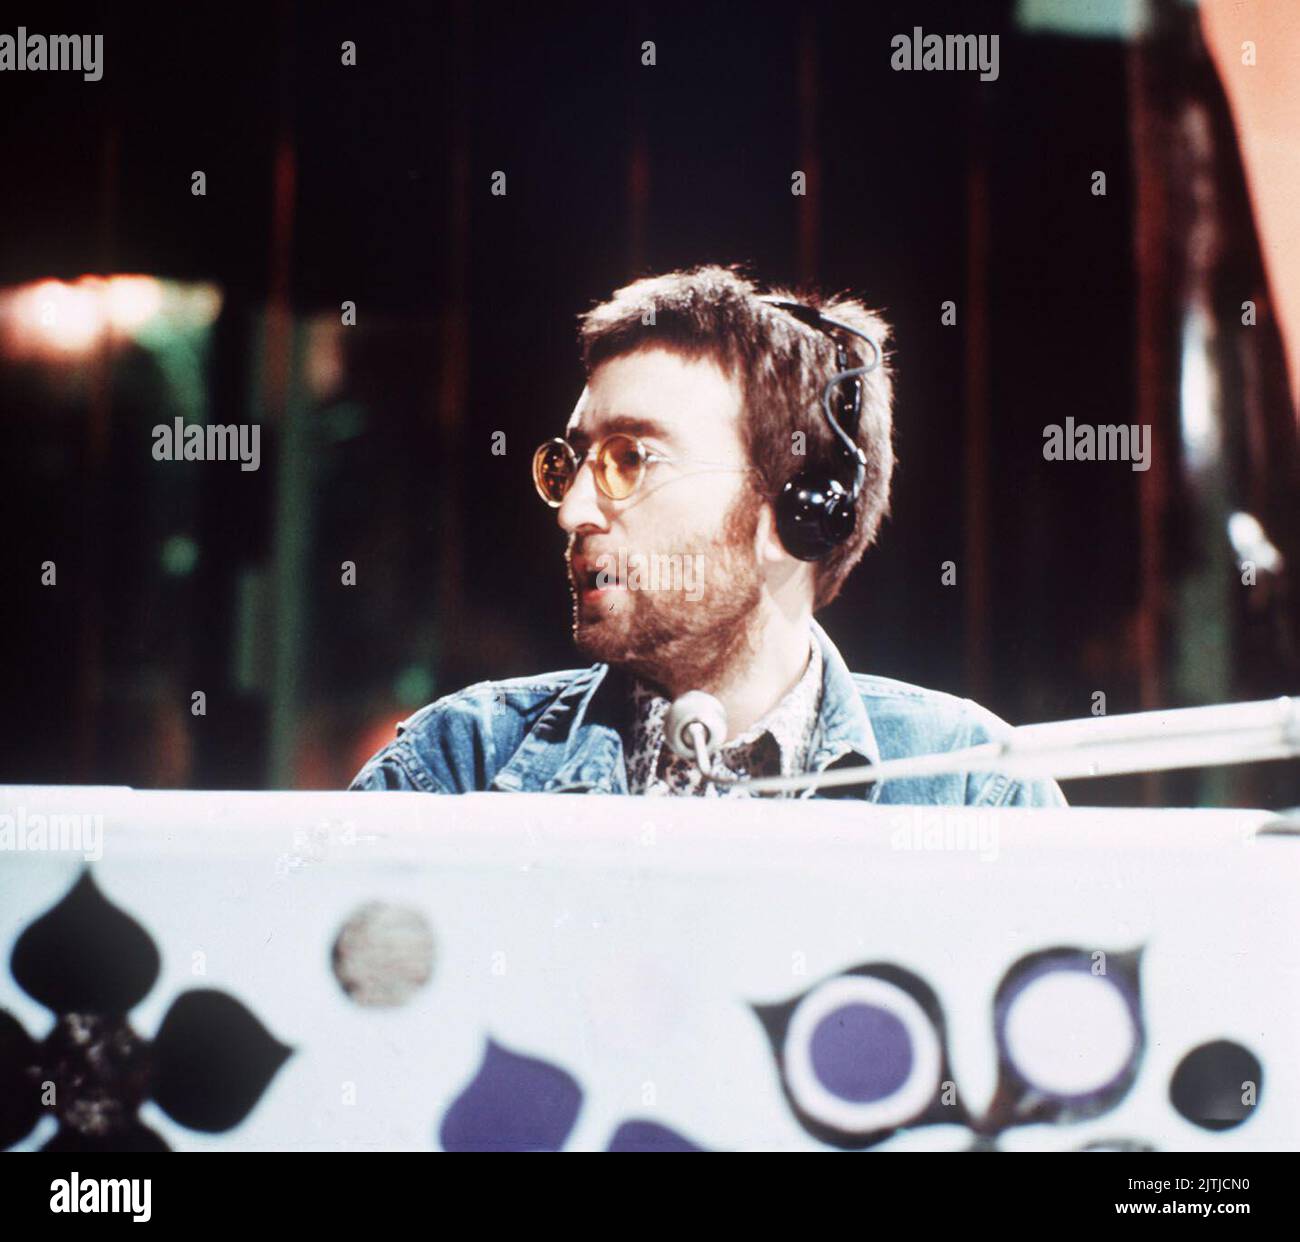 John Lennon, britischer Musiker, Komponist, Sänger und Songschreiber, circa 1970. John Lennon, British musician, composer, singer and songwriter, circa 1970. Stock Photo